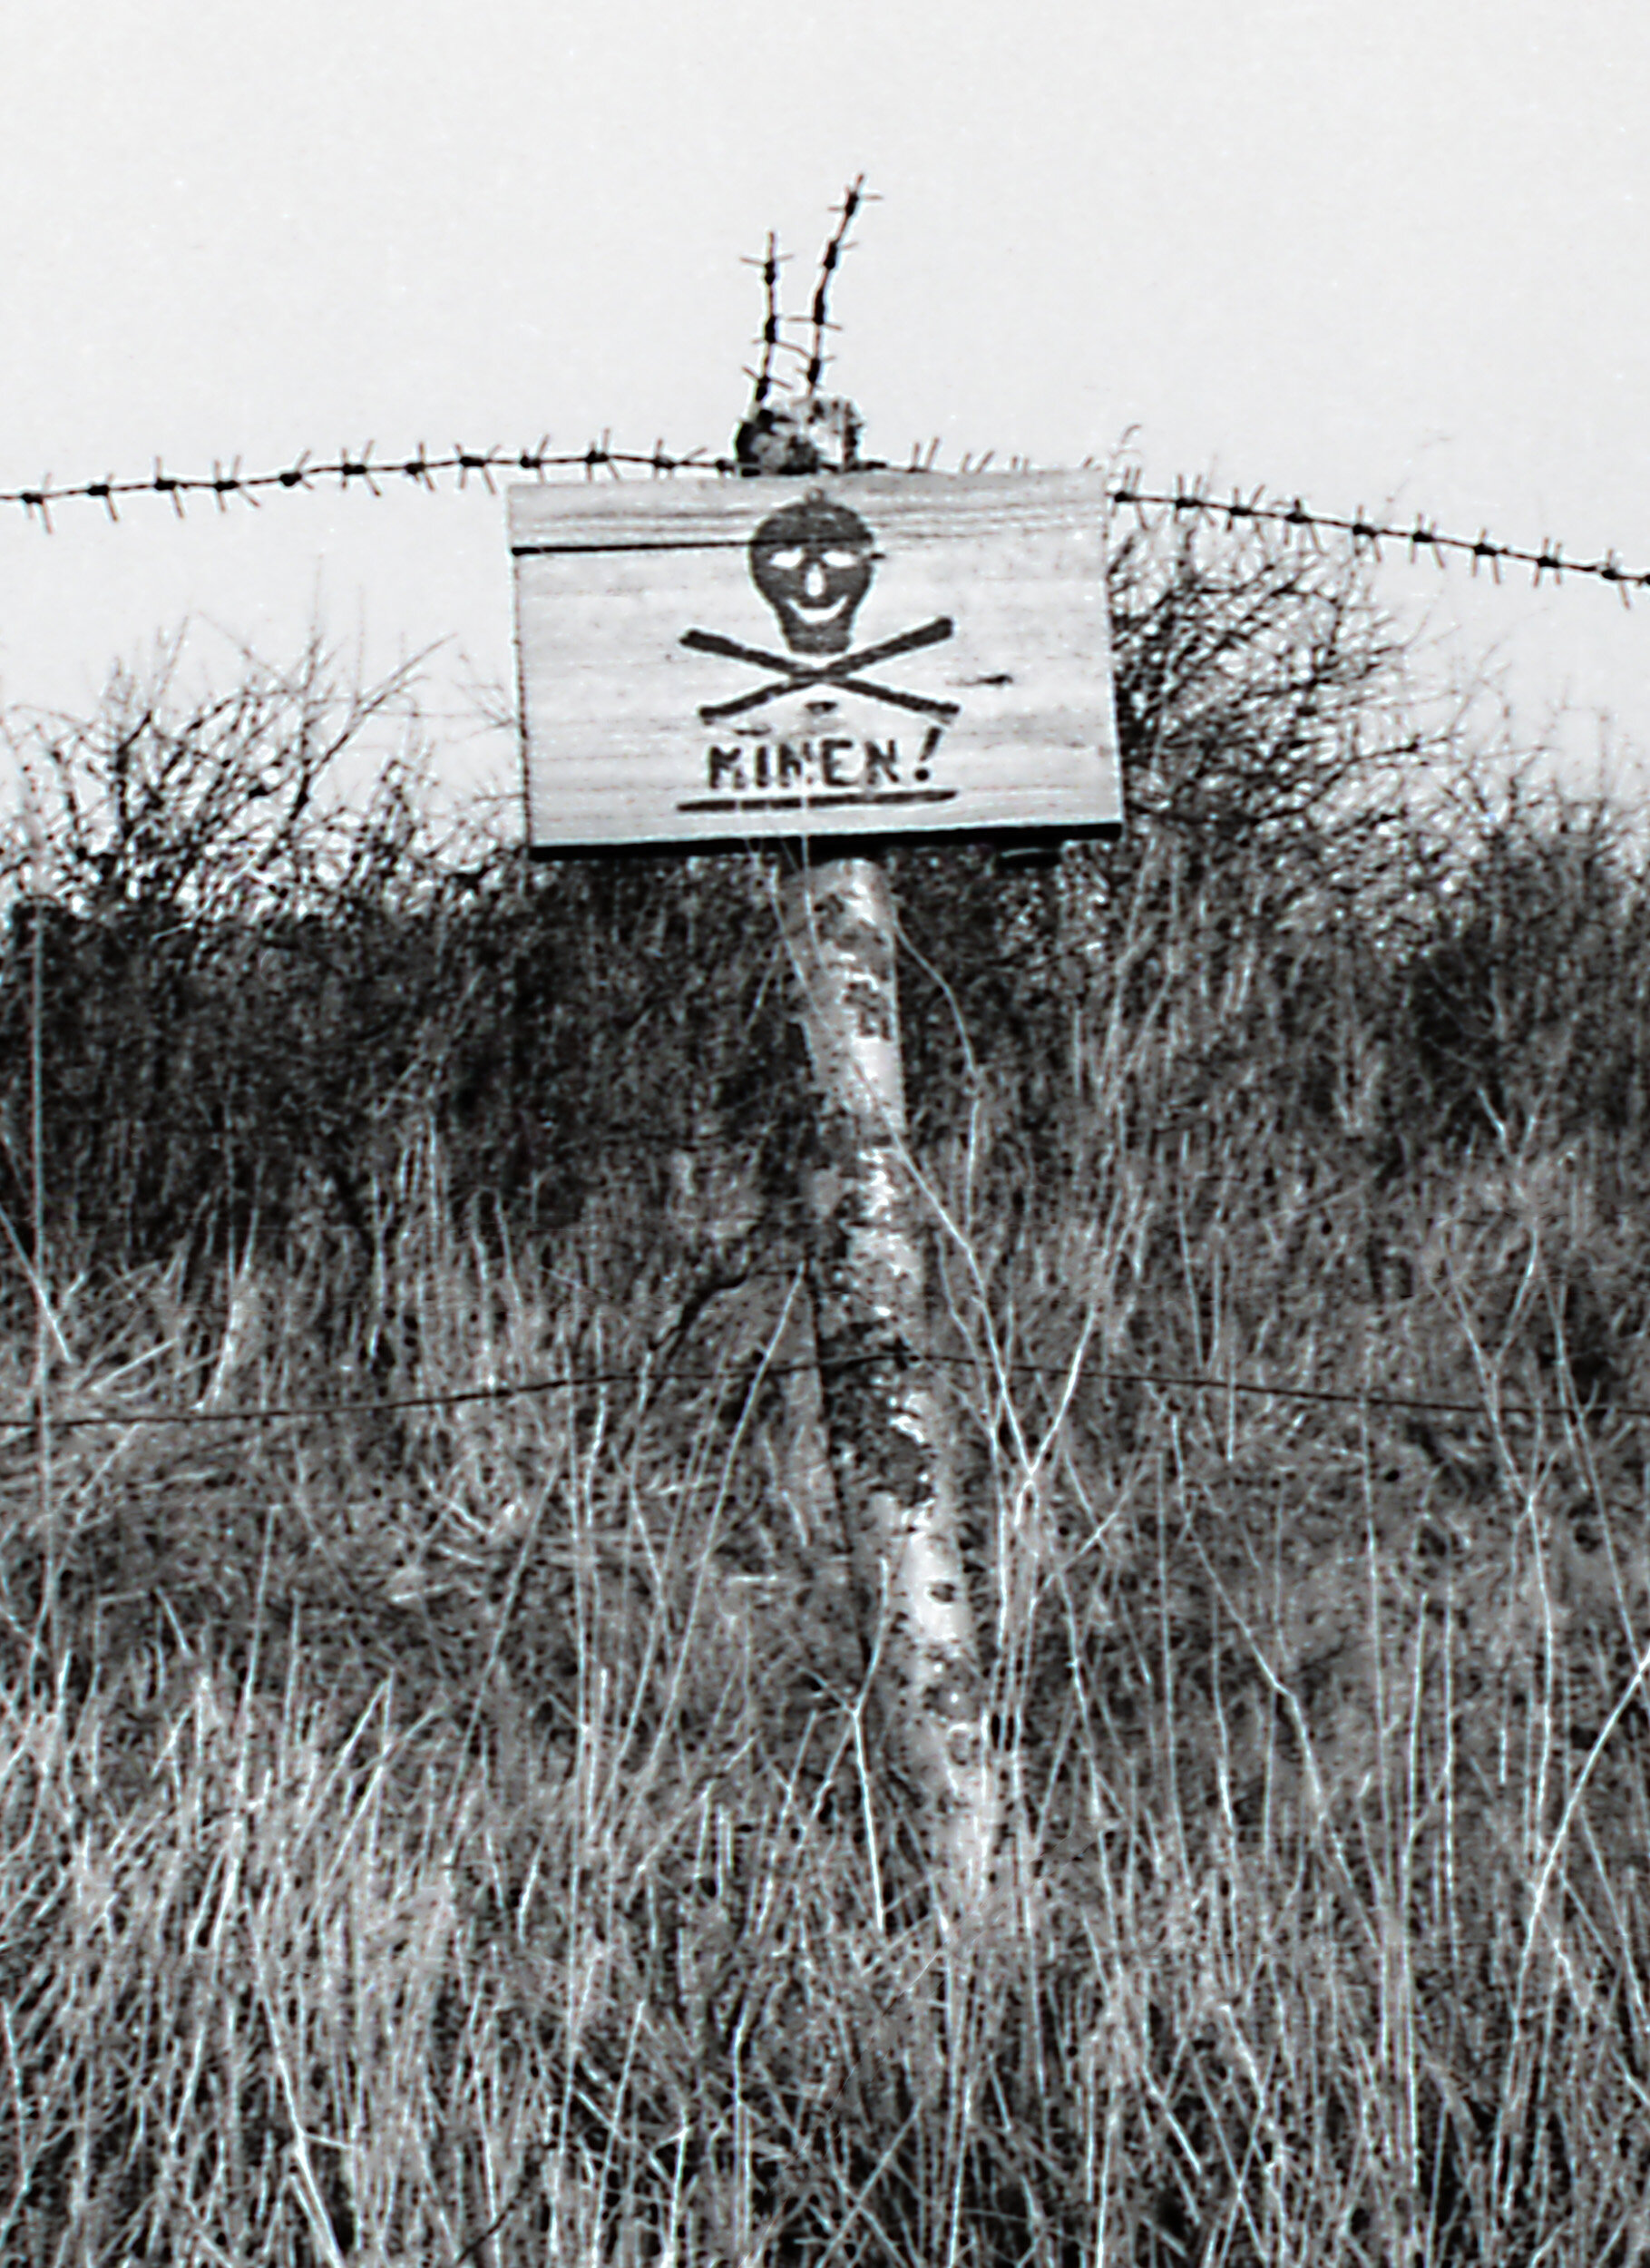 German minefield warning sign